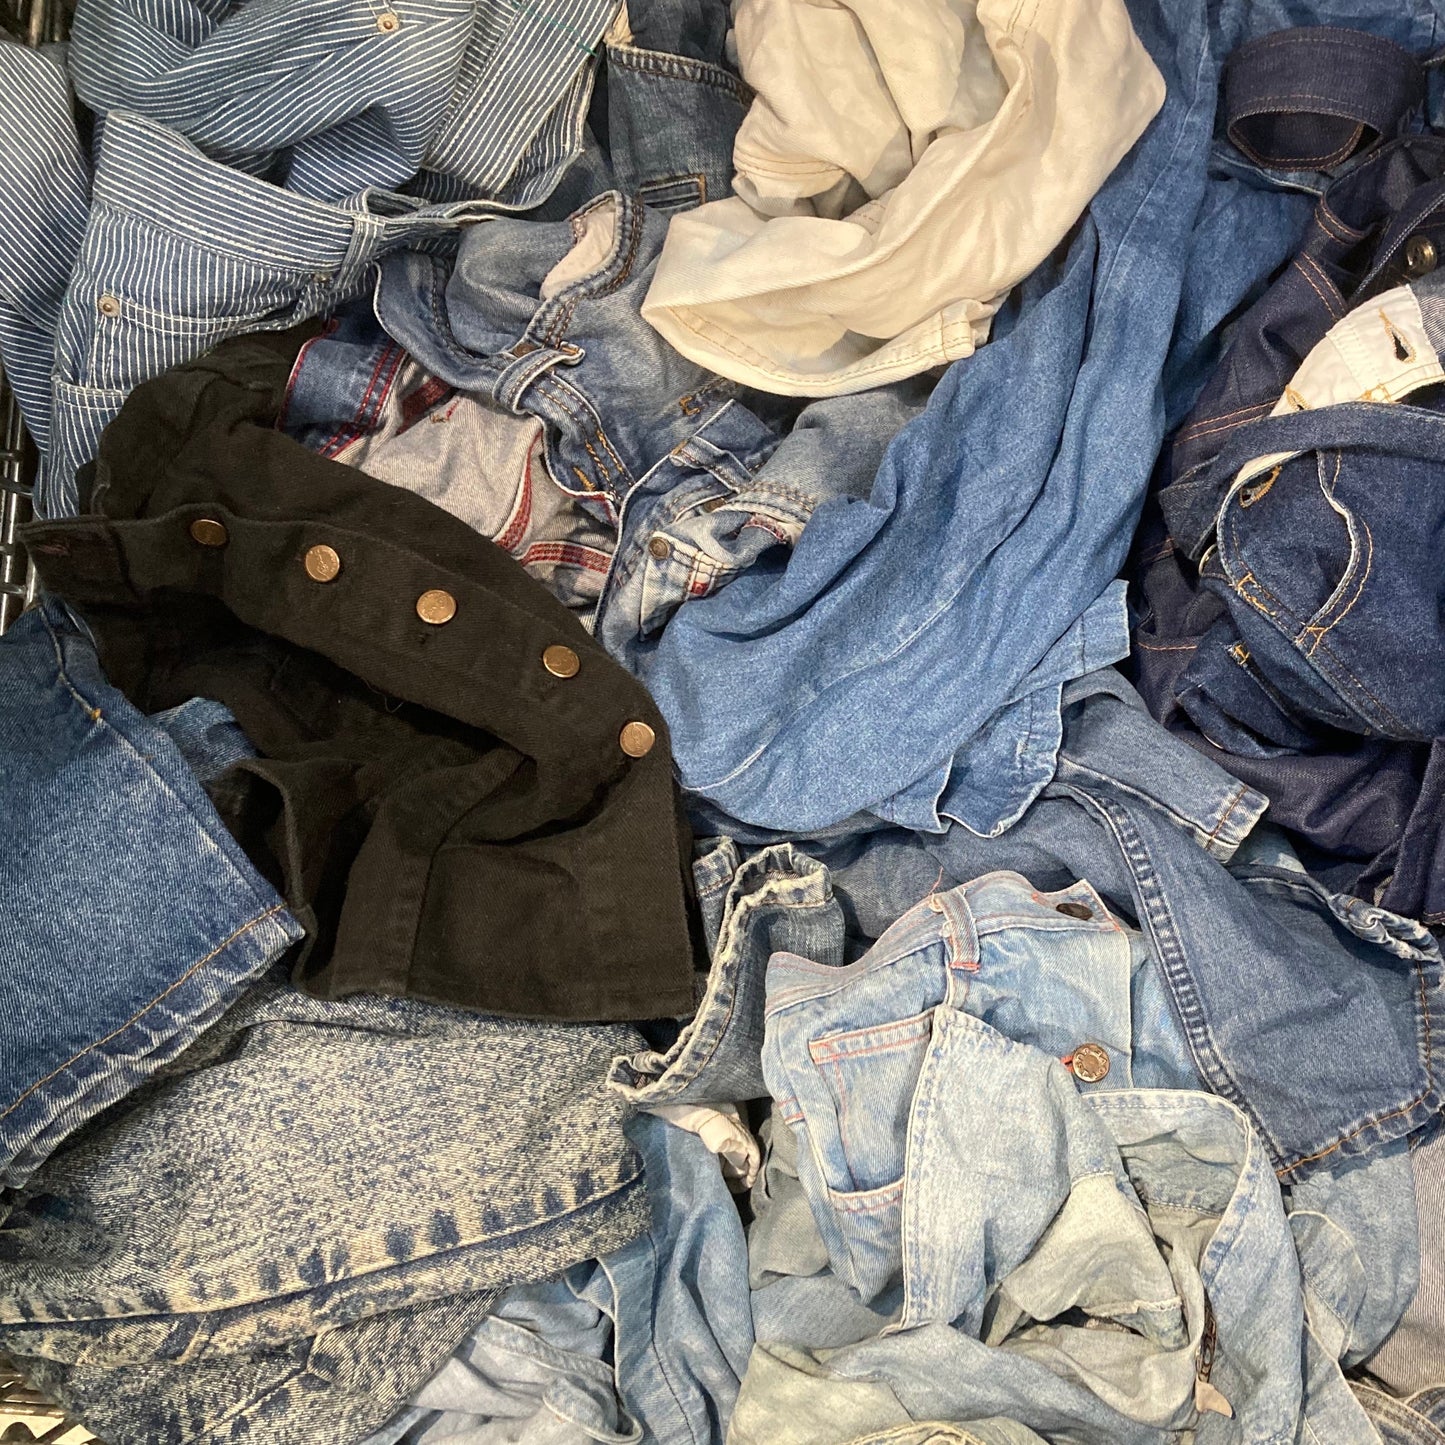 Denim Jeans (Rework Grade Wholesale)